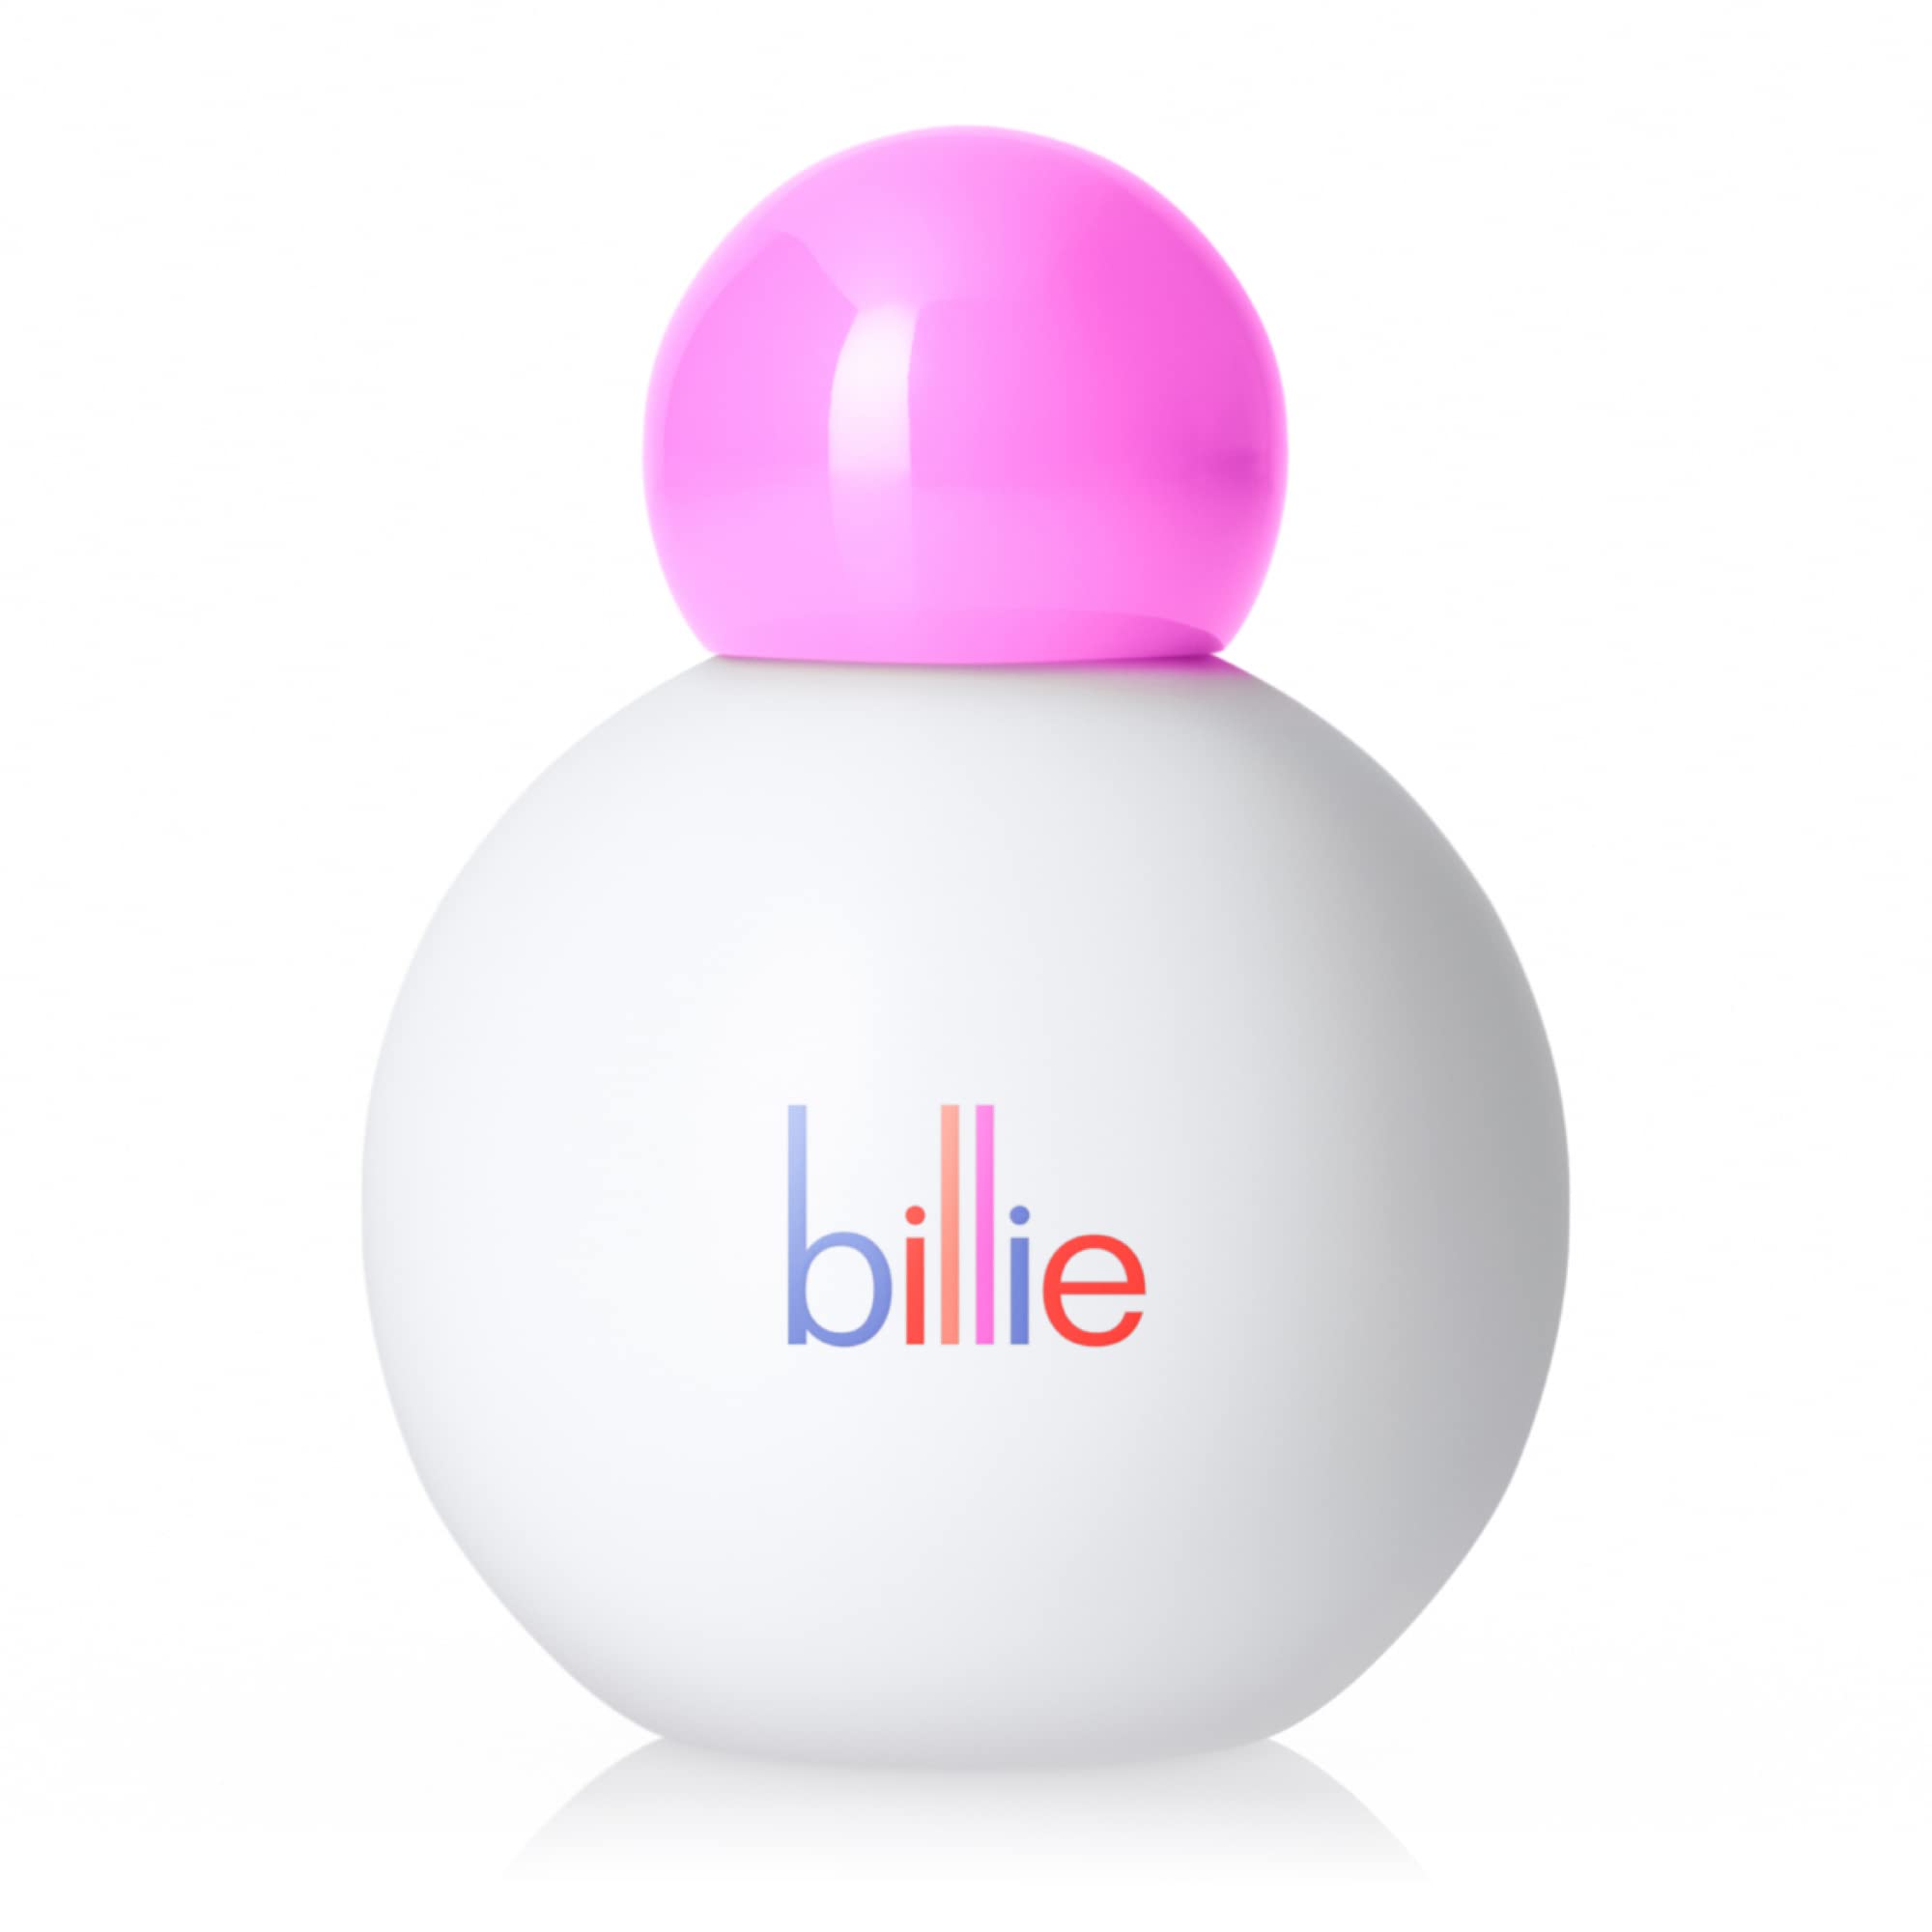 Billie Floof Dry Shampoo - Non-Aerosol Volumizing Powder - Light Hair - 1.2 oz